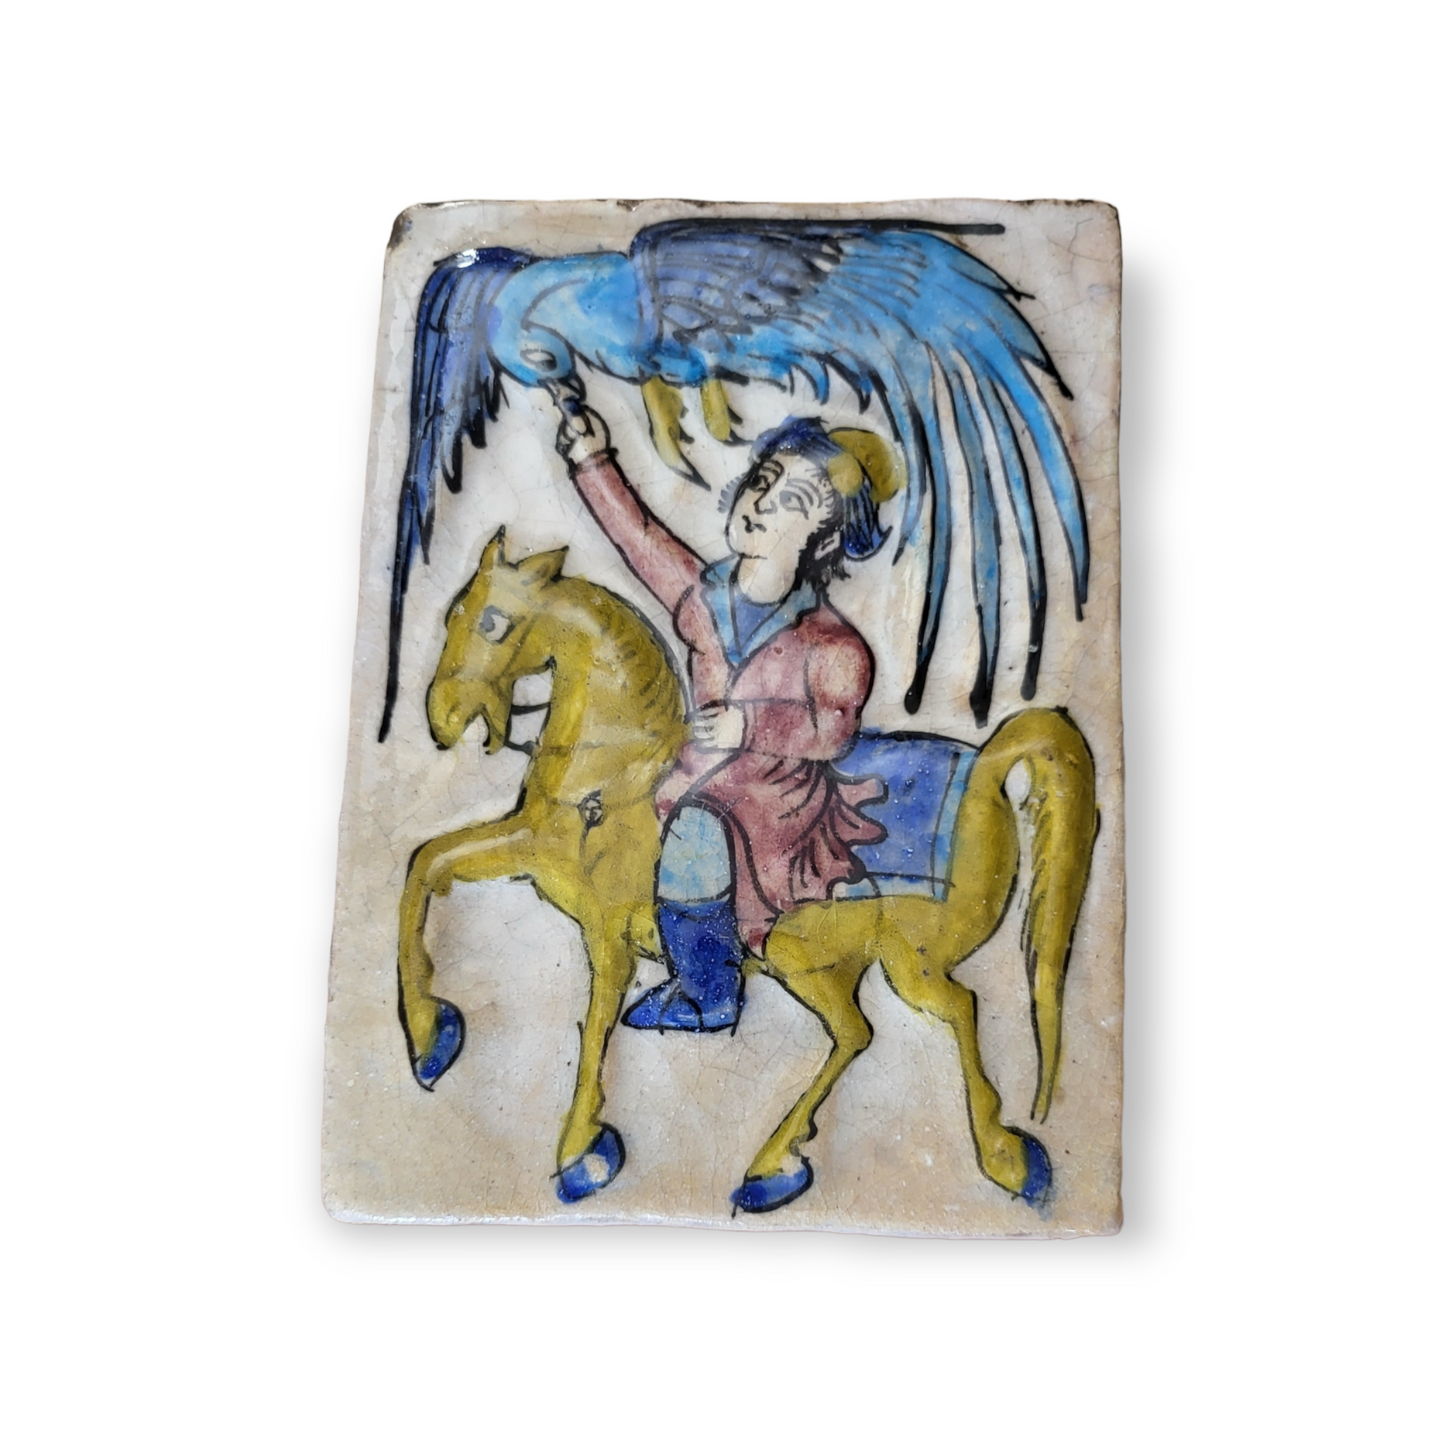 19th Century Persian Tile - Prince on Horseback Reaching for Huma